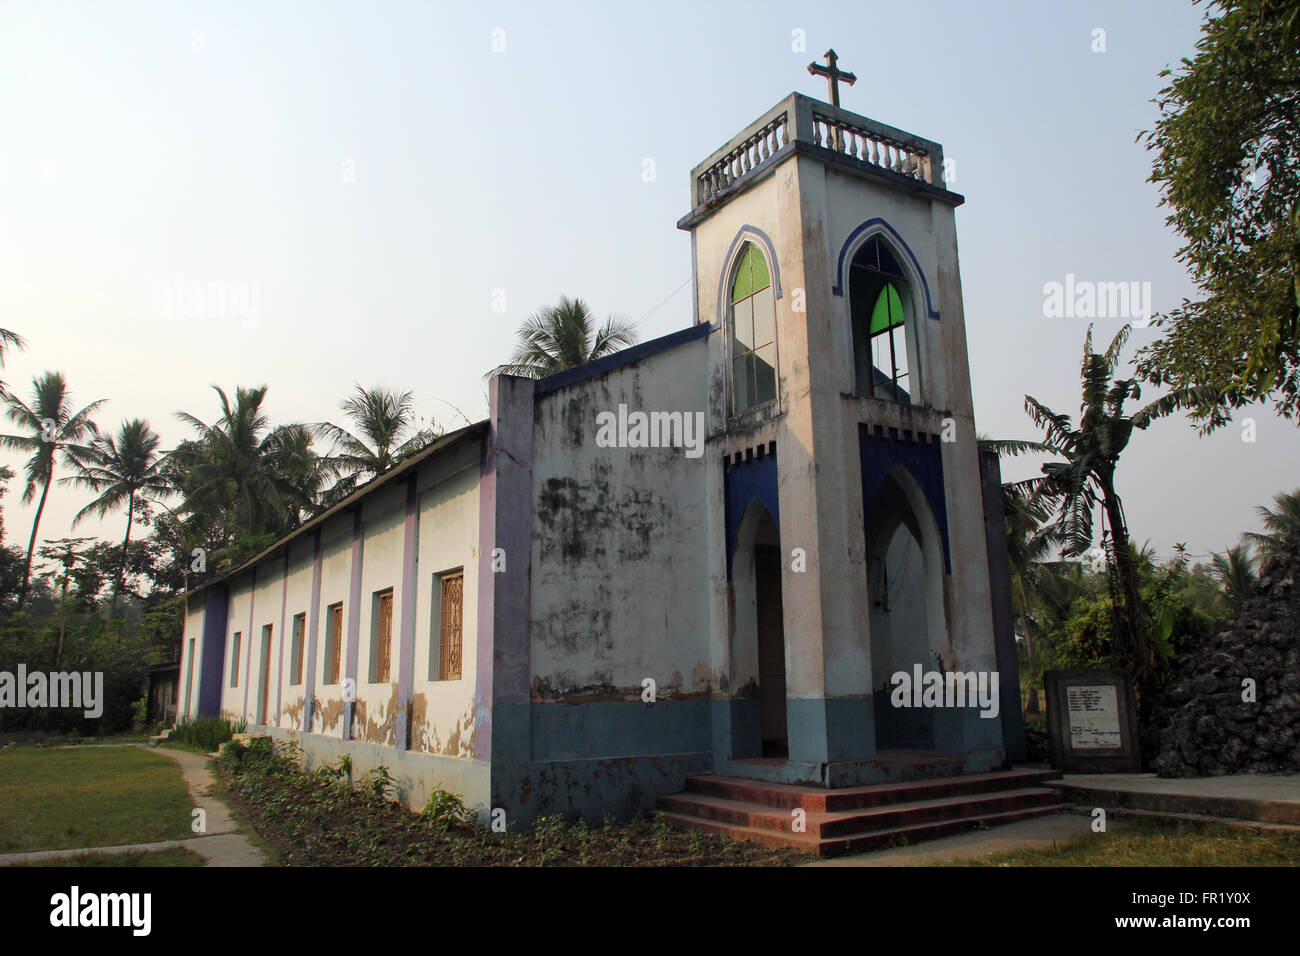 Catholic church in Baidyapur, West Bengal, India on December 02, 2012. Stock Photo